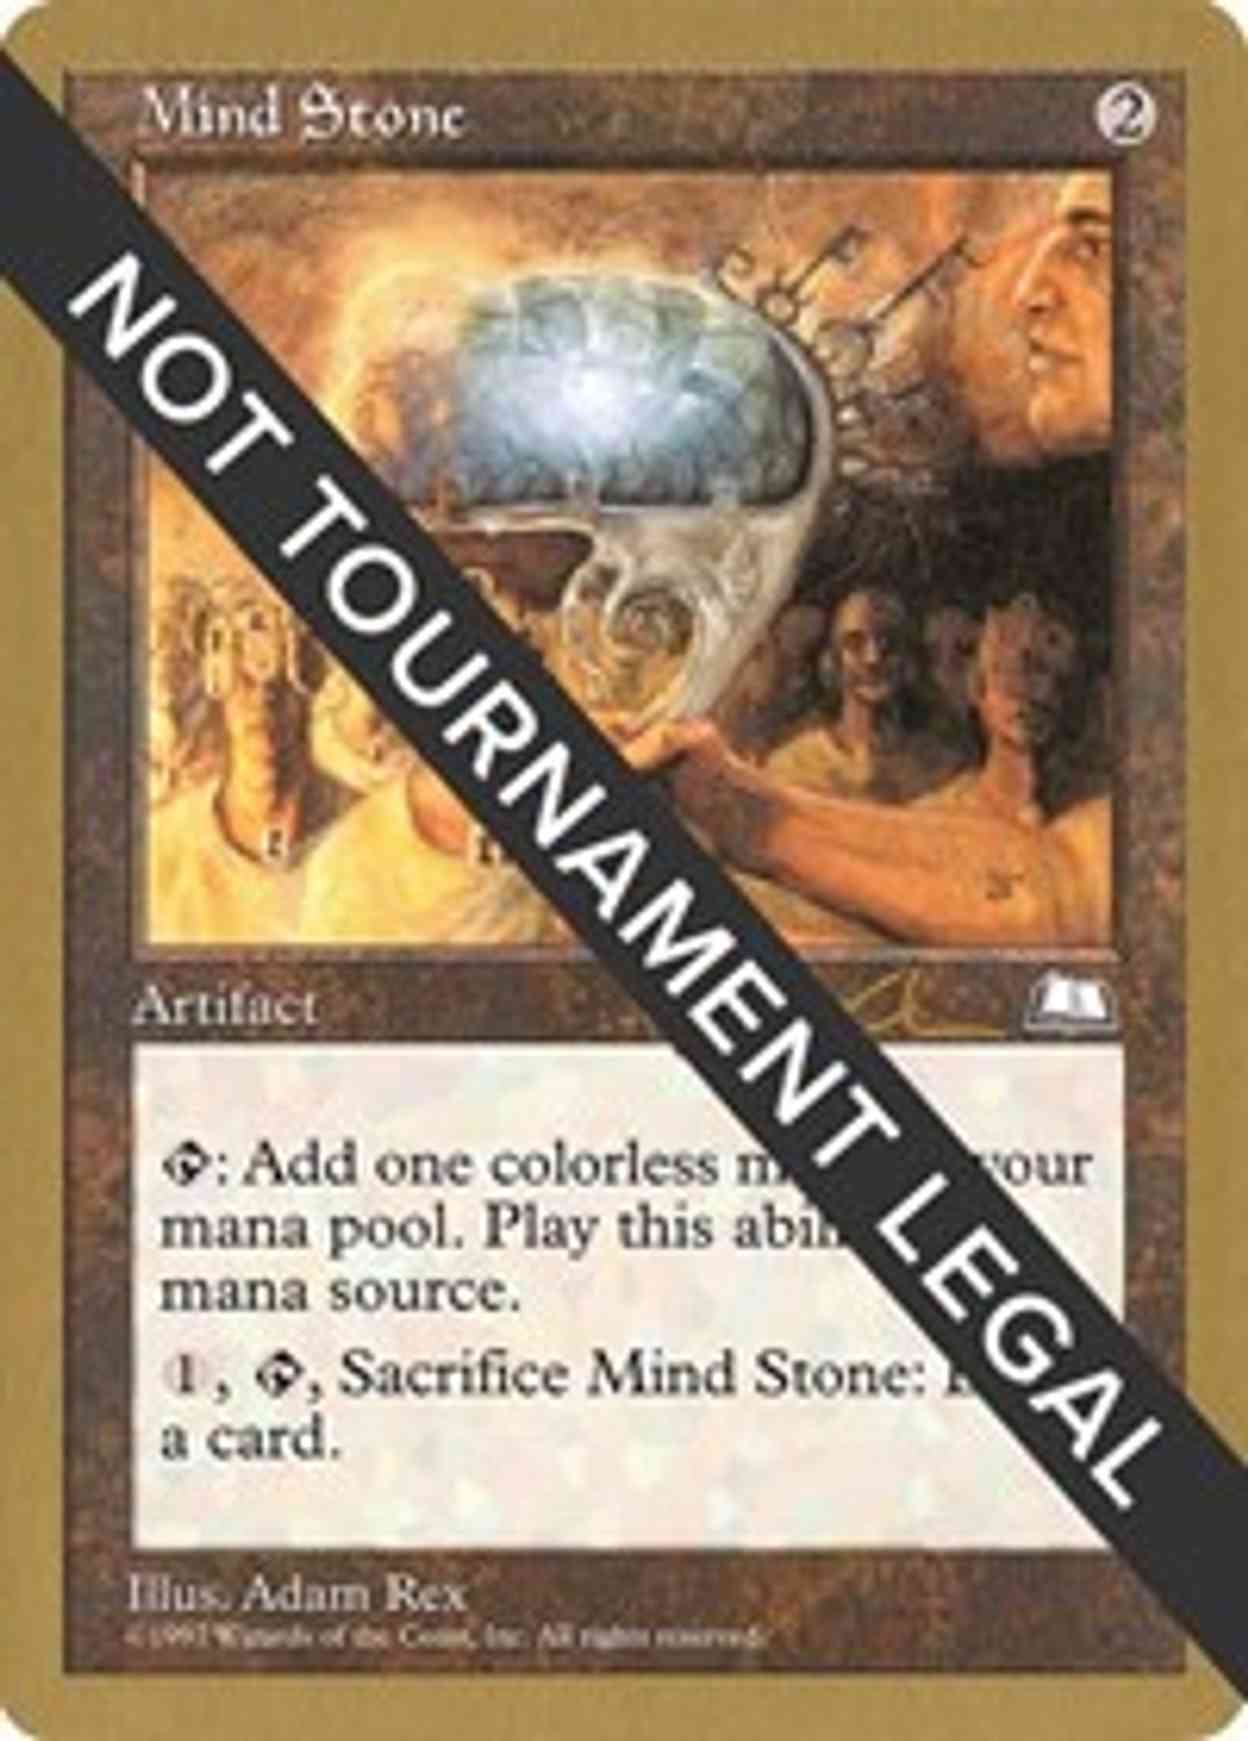 Mind Stone - 1997 Paul McCabe (WTH) magic card front